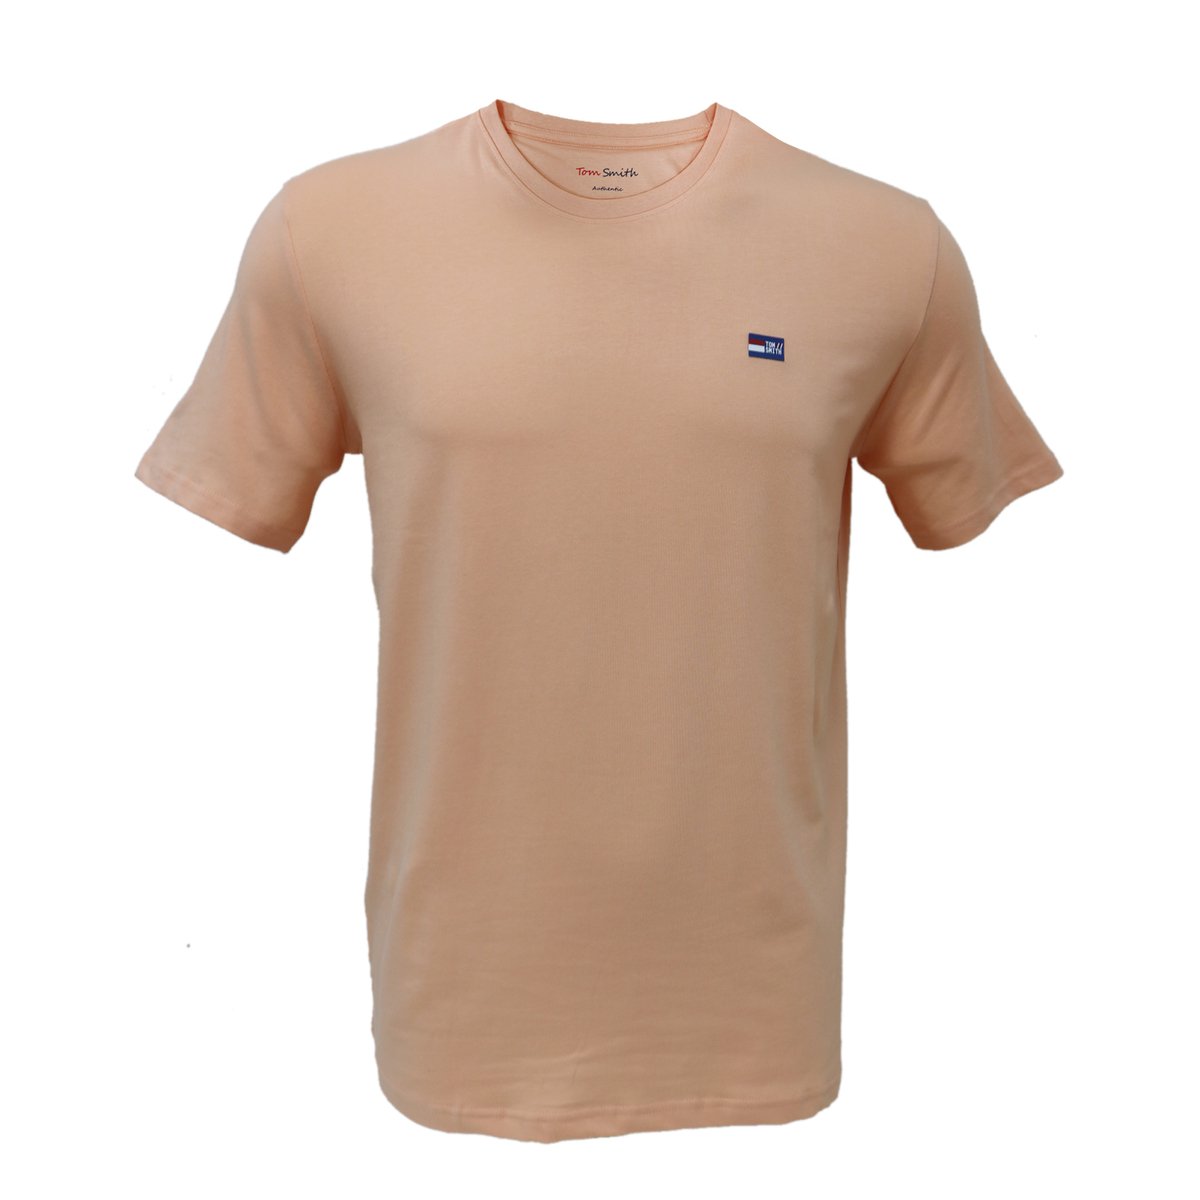 Tom Smith Basic Round Neck T-Shirt Salmon - XXL